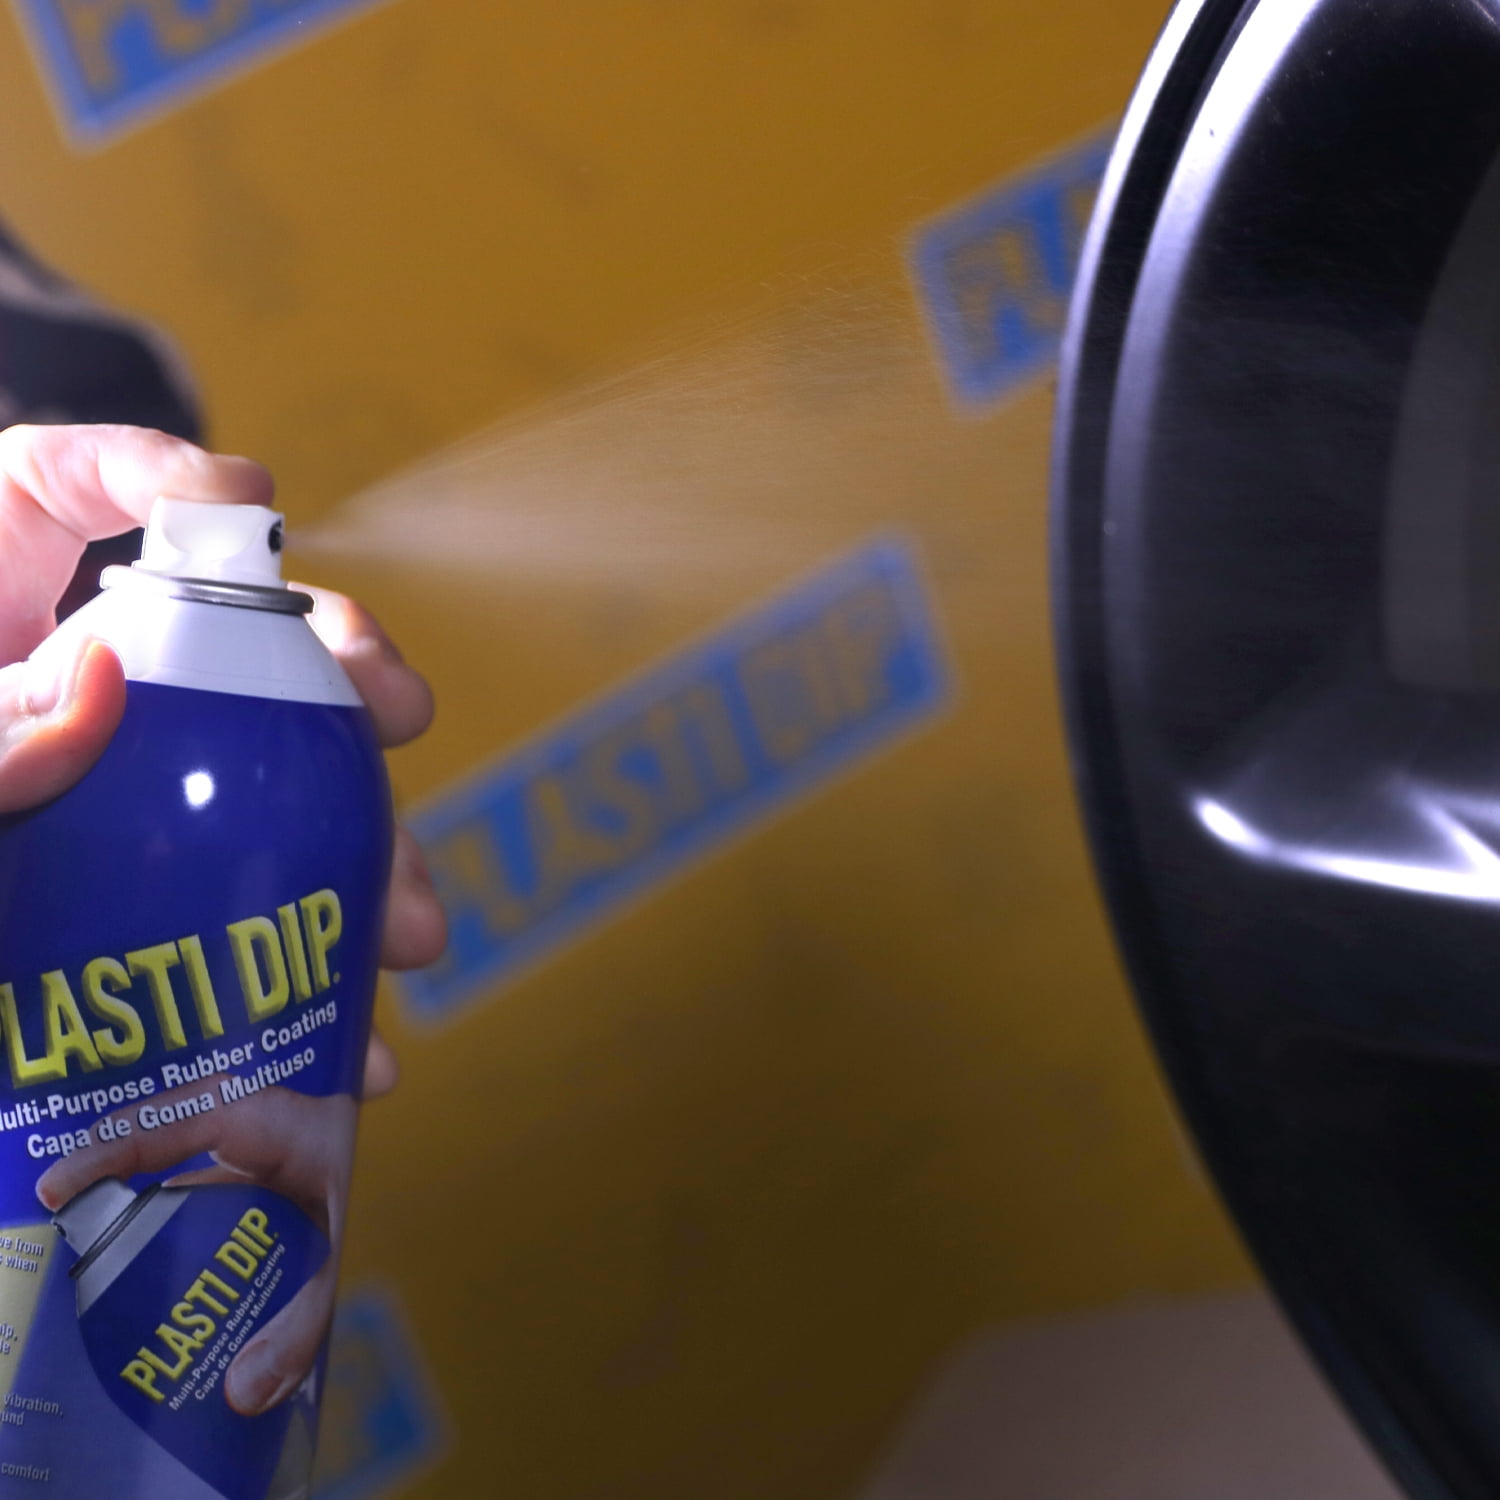 2 PACK PLASTI DIP Mulit-Purpose Rubber Coating Spray BLACK 11oz …